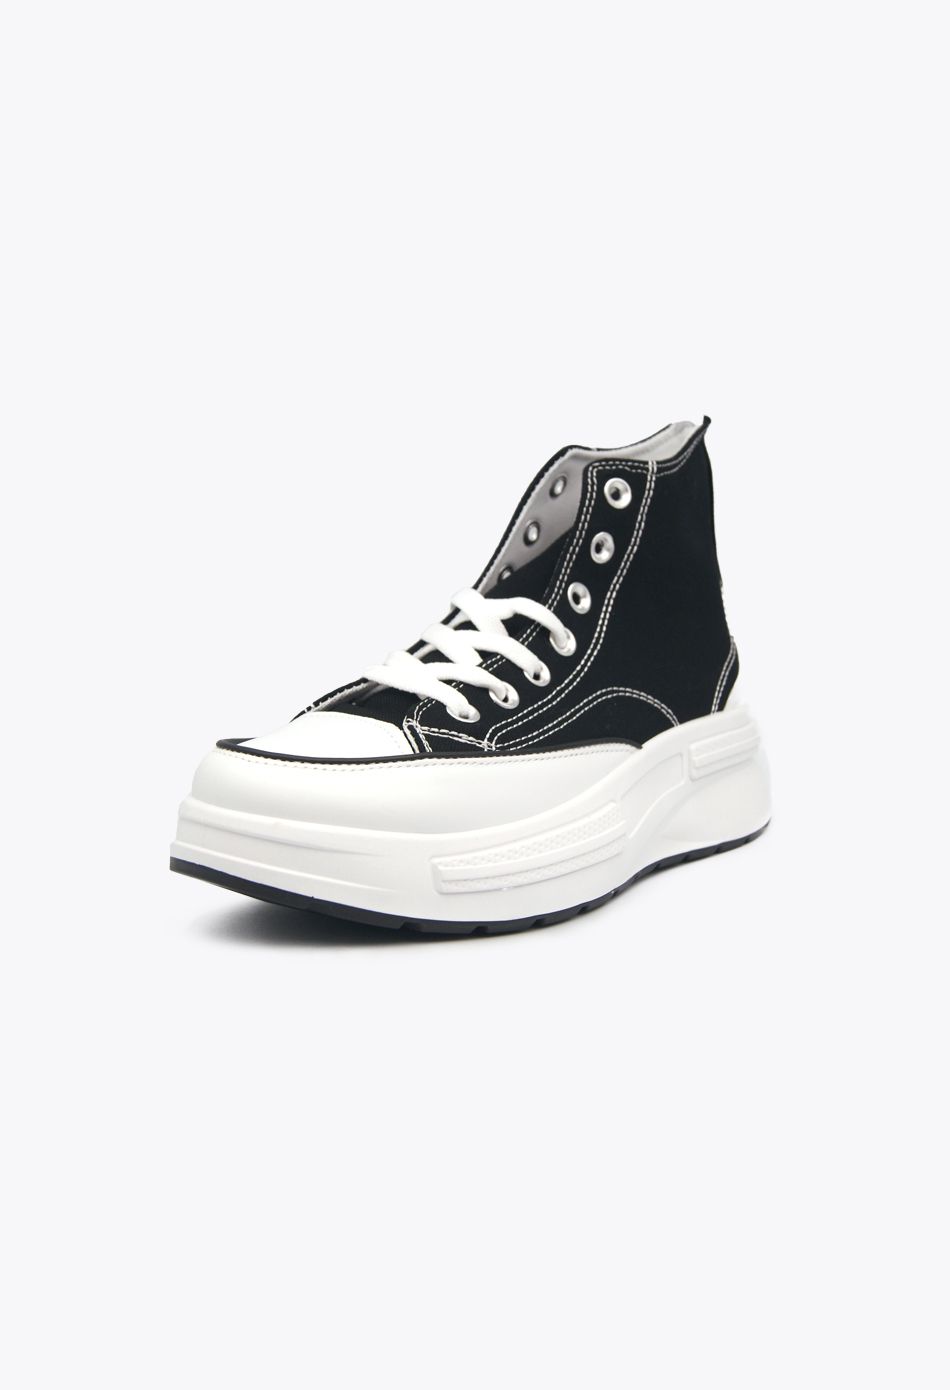 Sneakers Μποτάκια Πάνινα Μαύρο / C895-black Γυναικεία Αθλητικά και Sneakers joya.gr